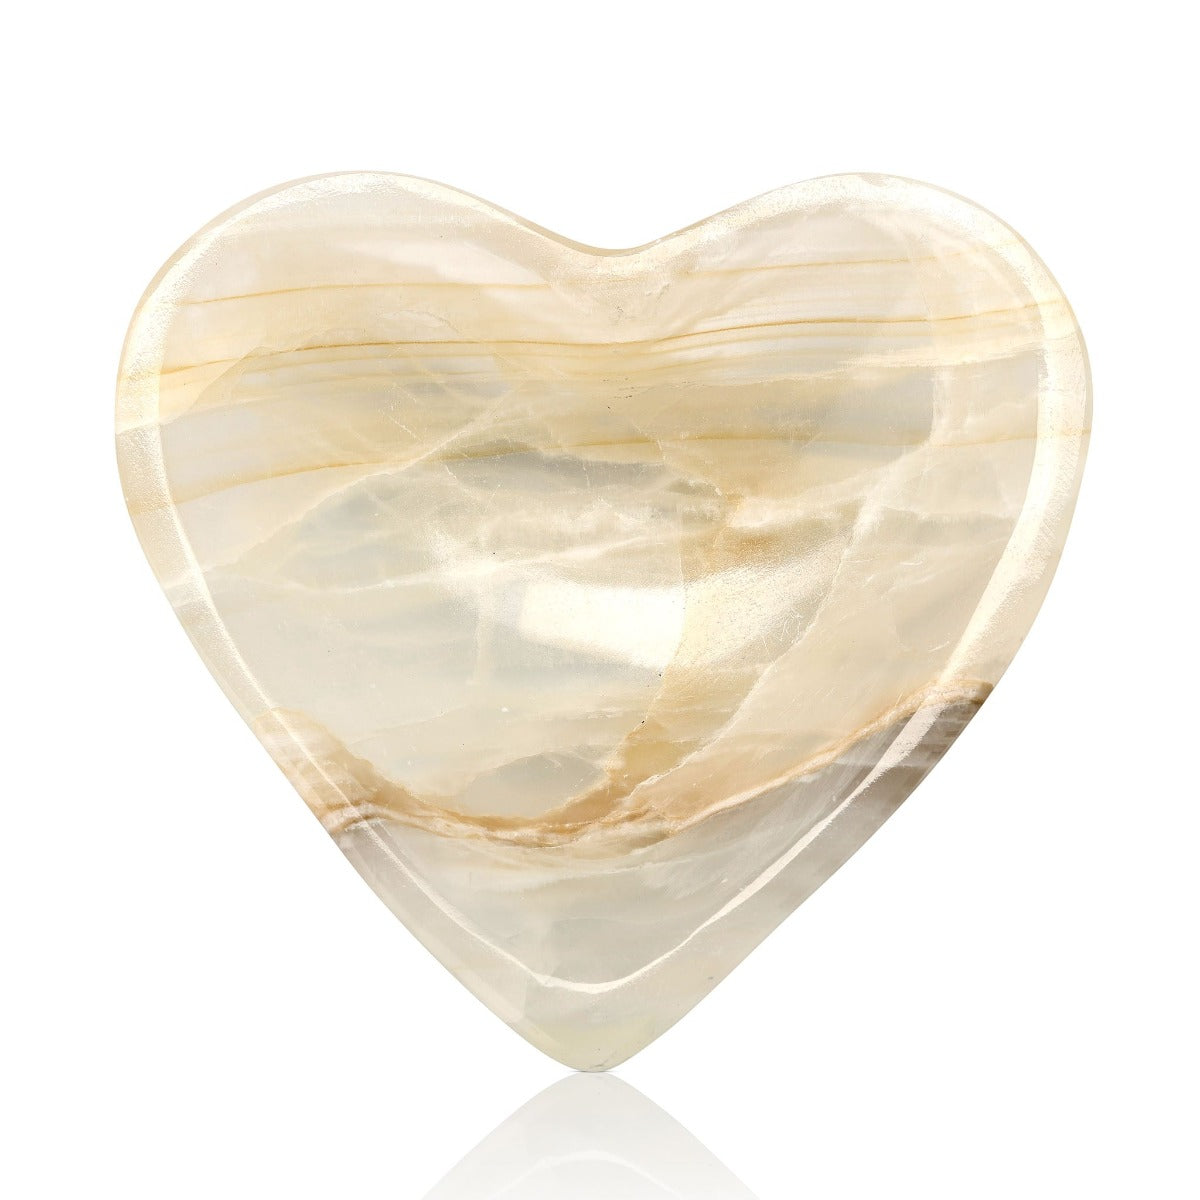 Aragonite Heart Shaped Bowl - Polished